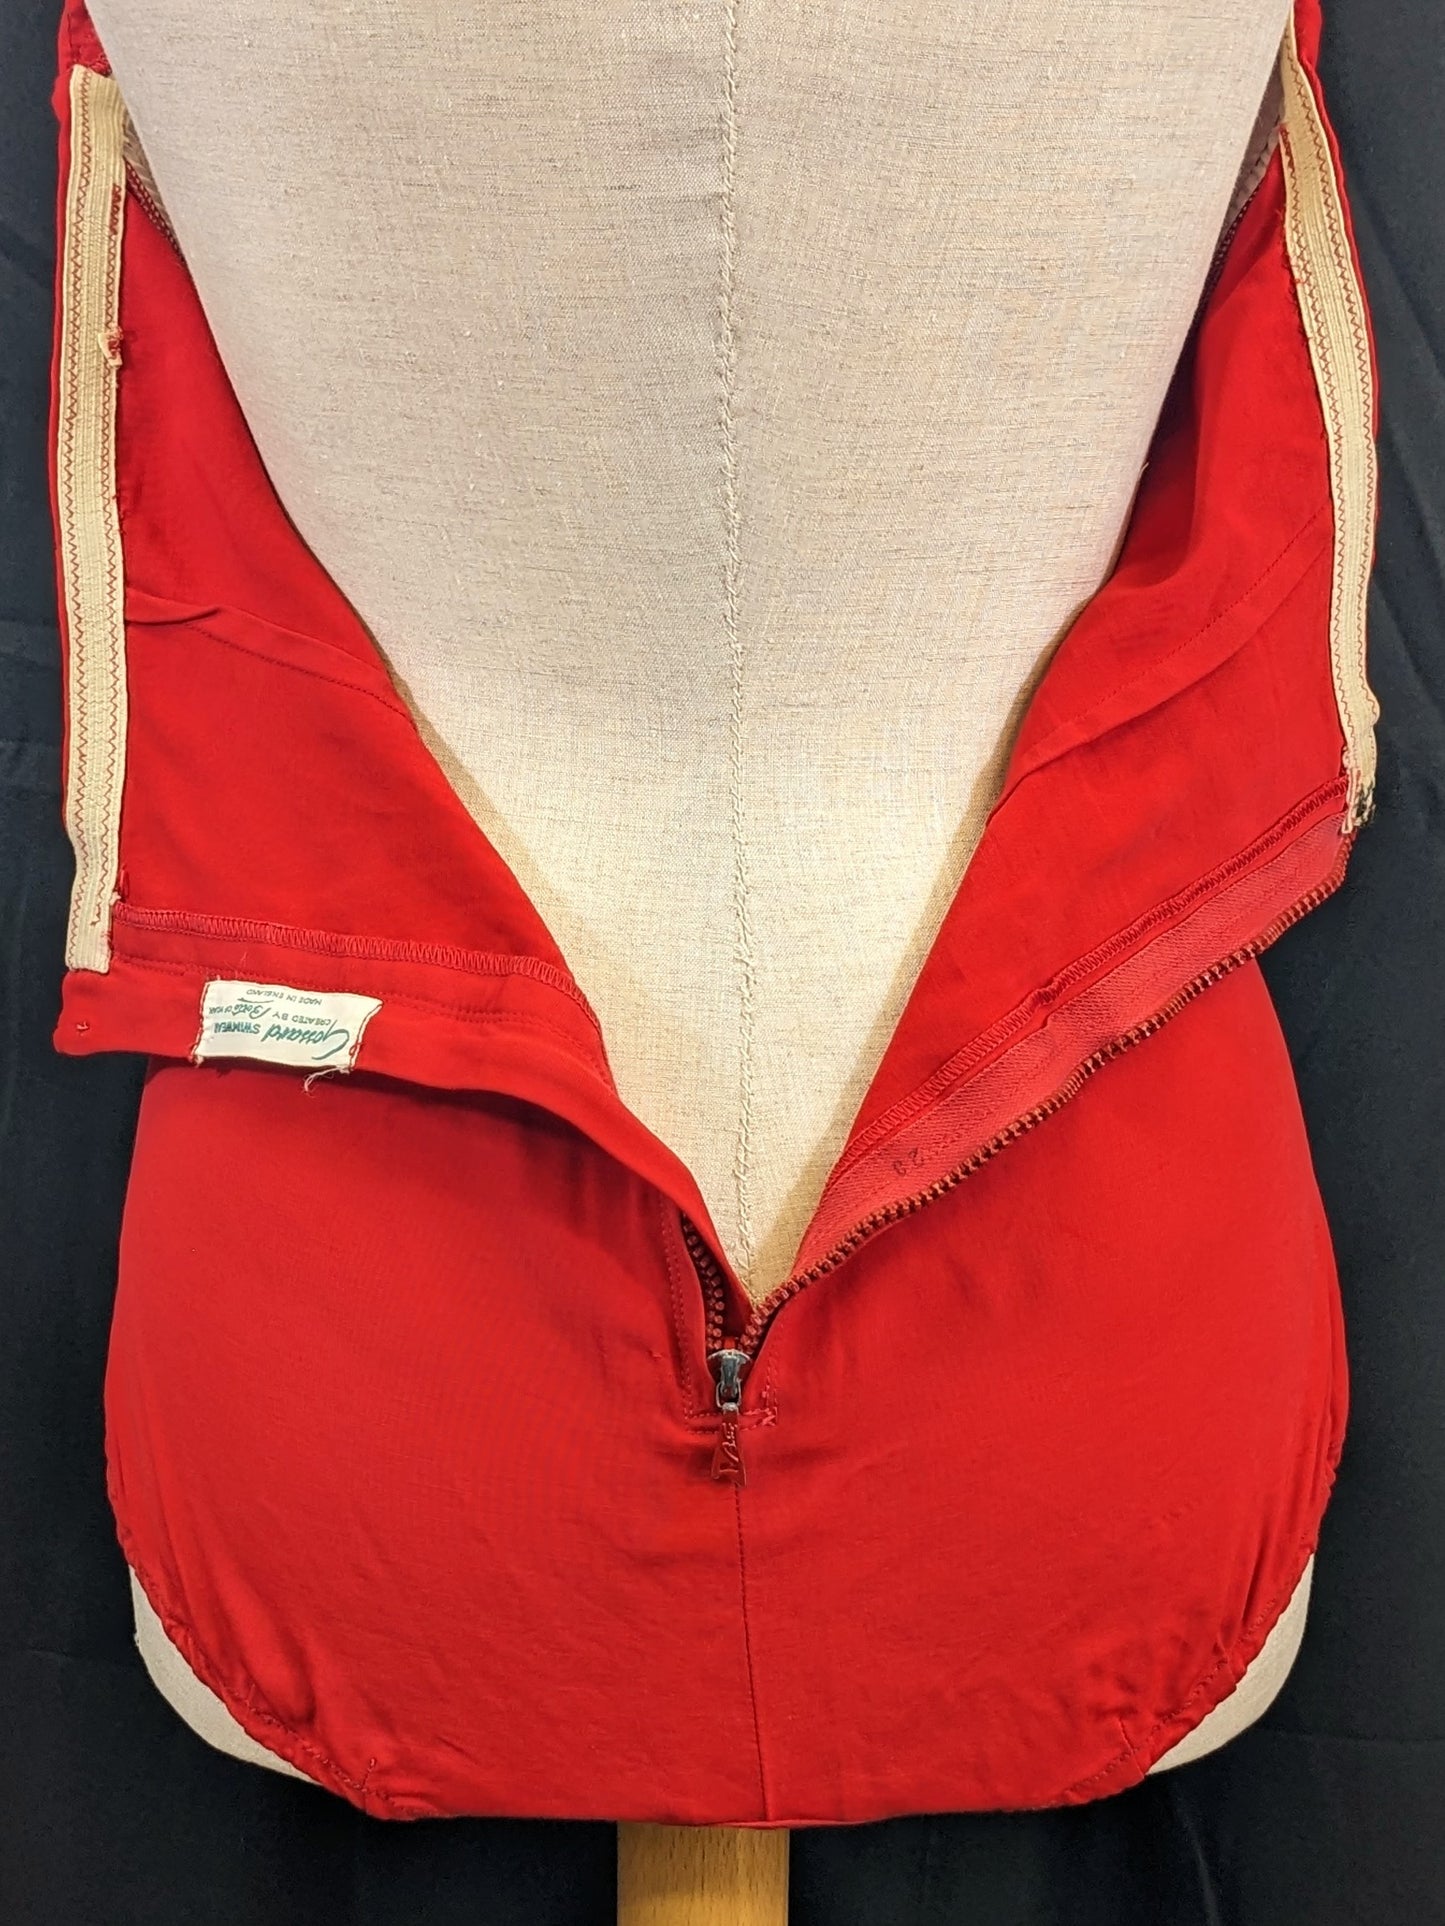 1950s Gossard Swimsuit